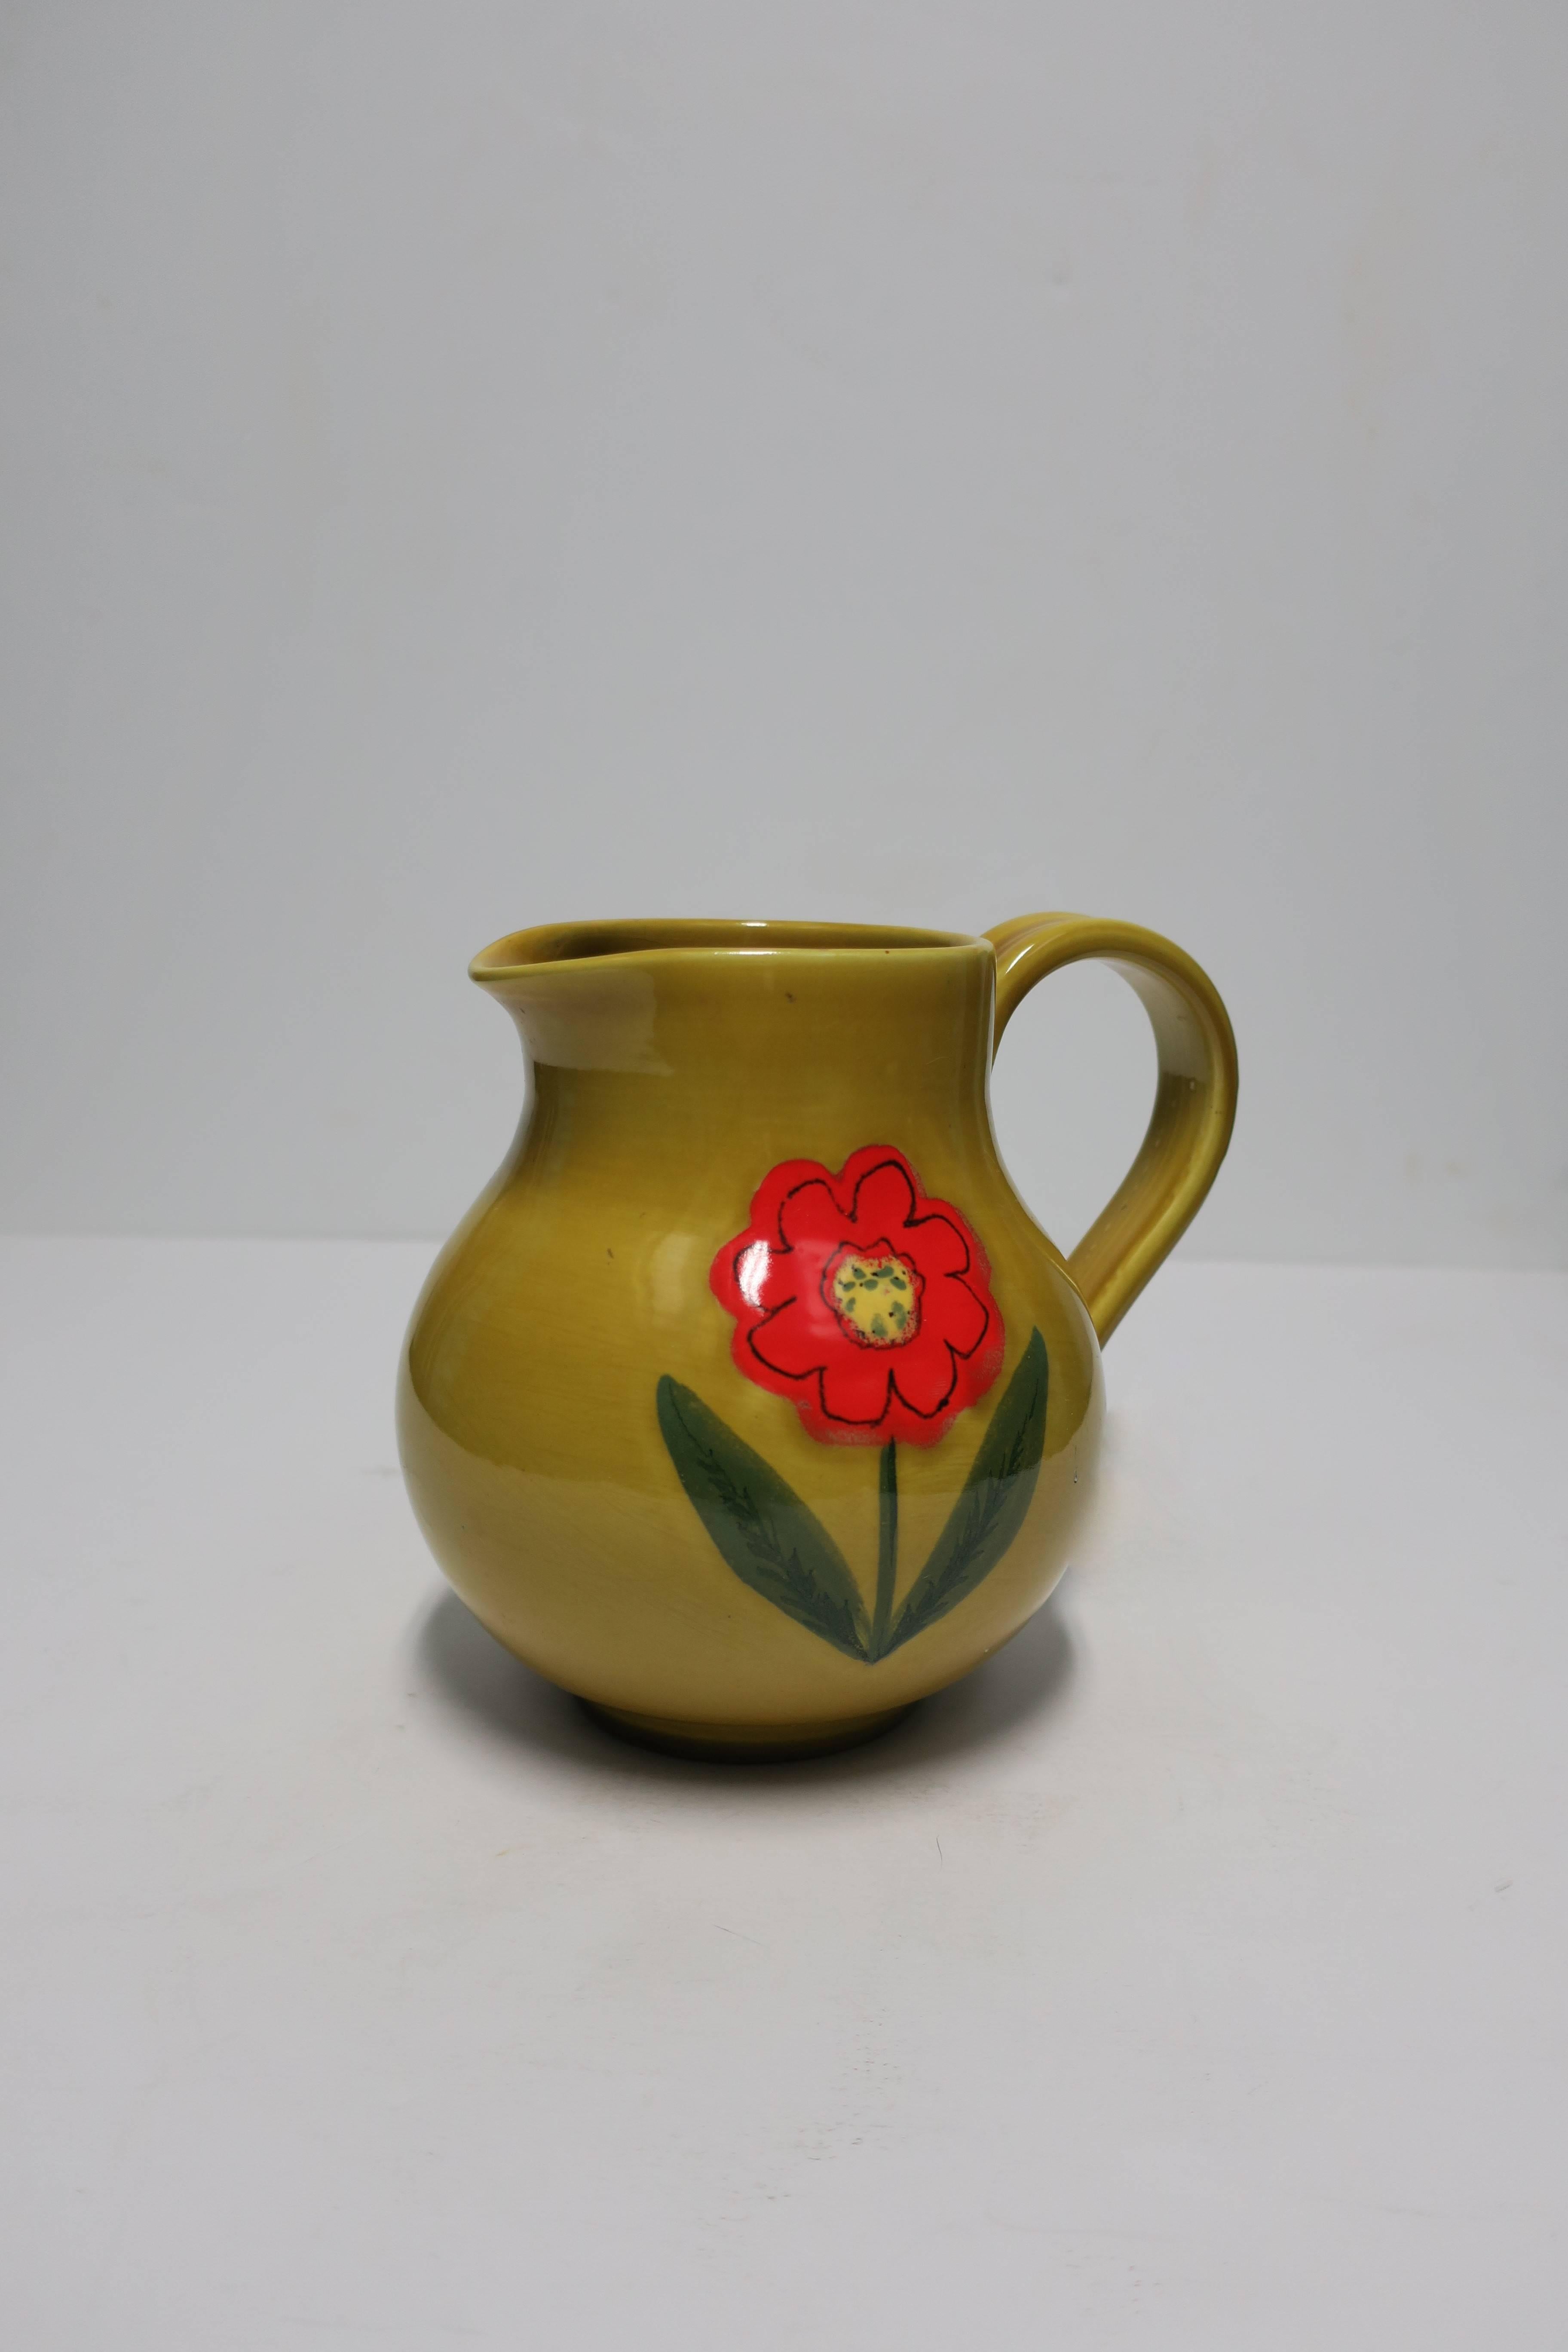 20th Century Italian Ceramic Pottery Pitcher or Vase